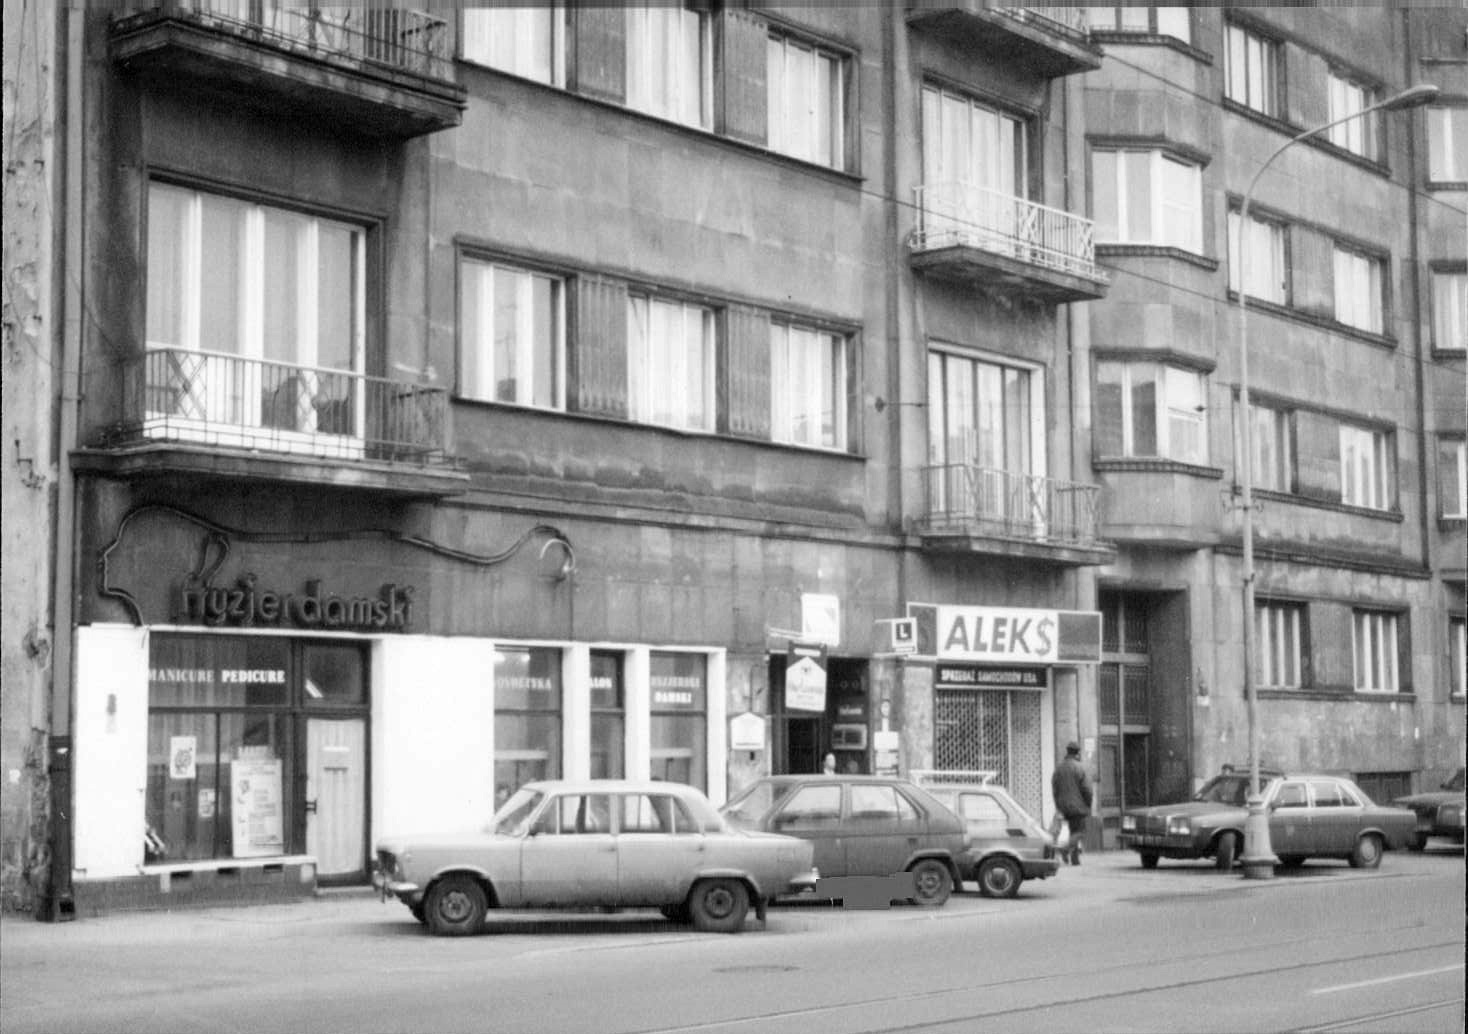 Łódź street scenes, 1990